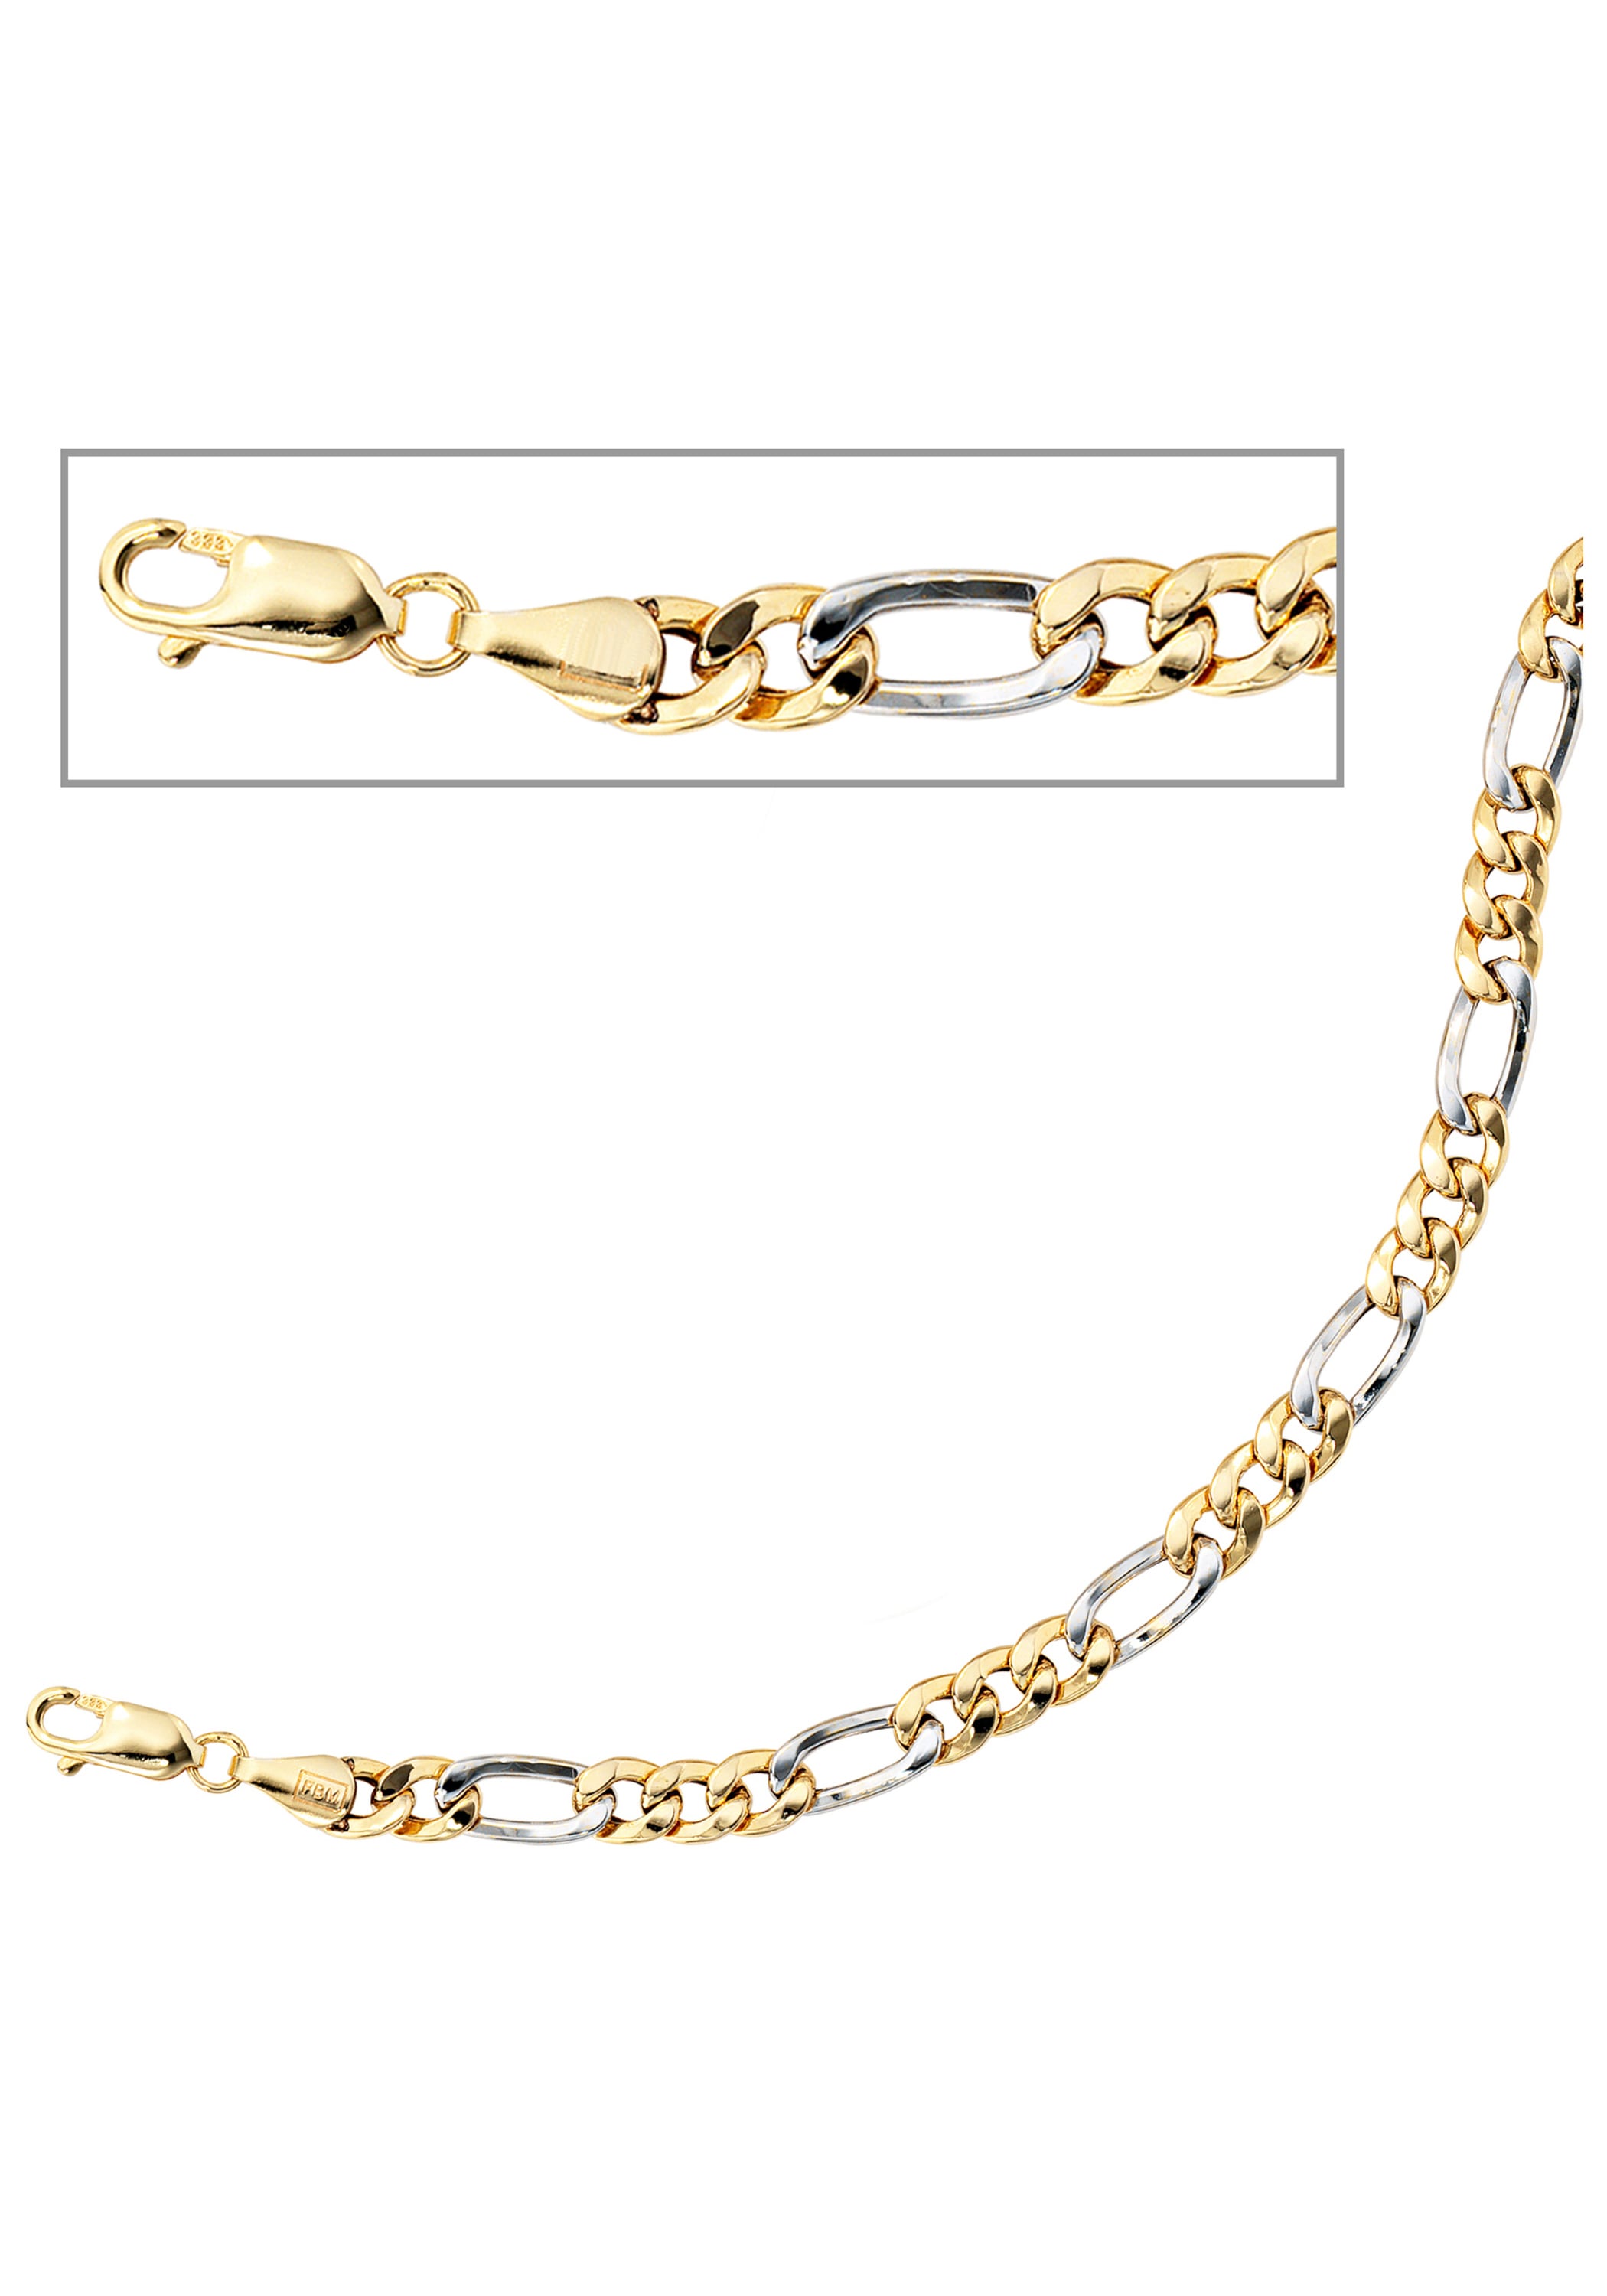 JOBO Goldkette, Figarokette 333 Gold bicolor 50 cm